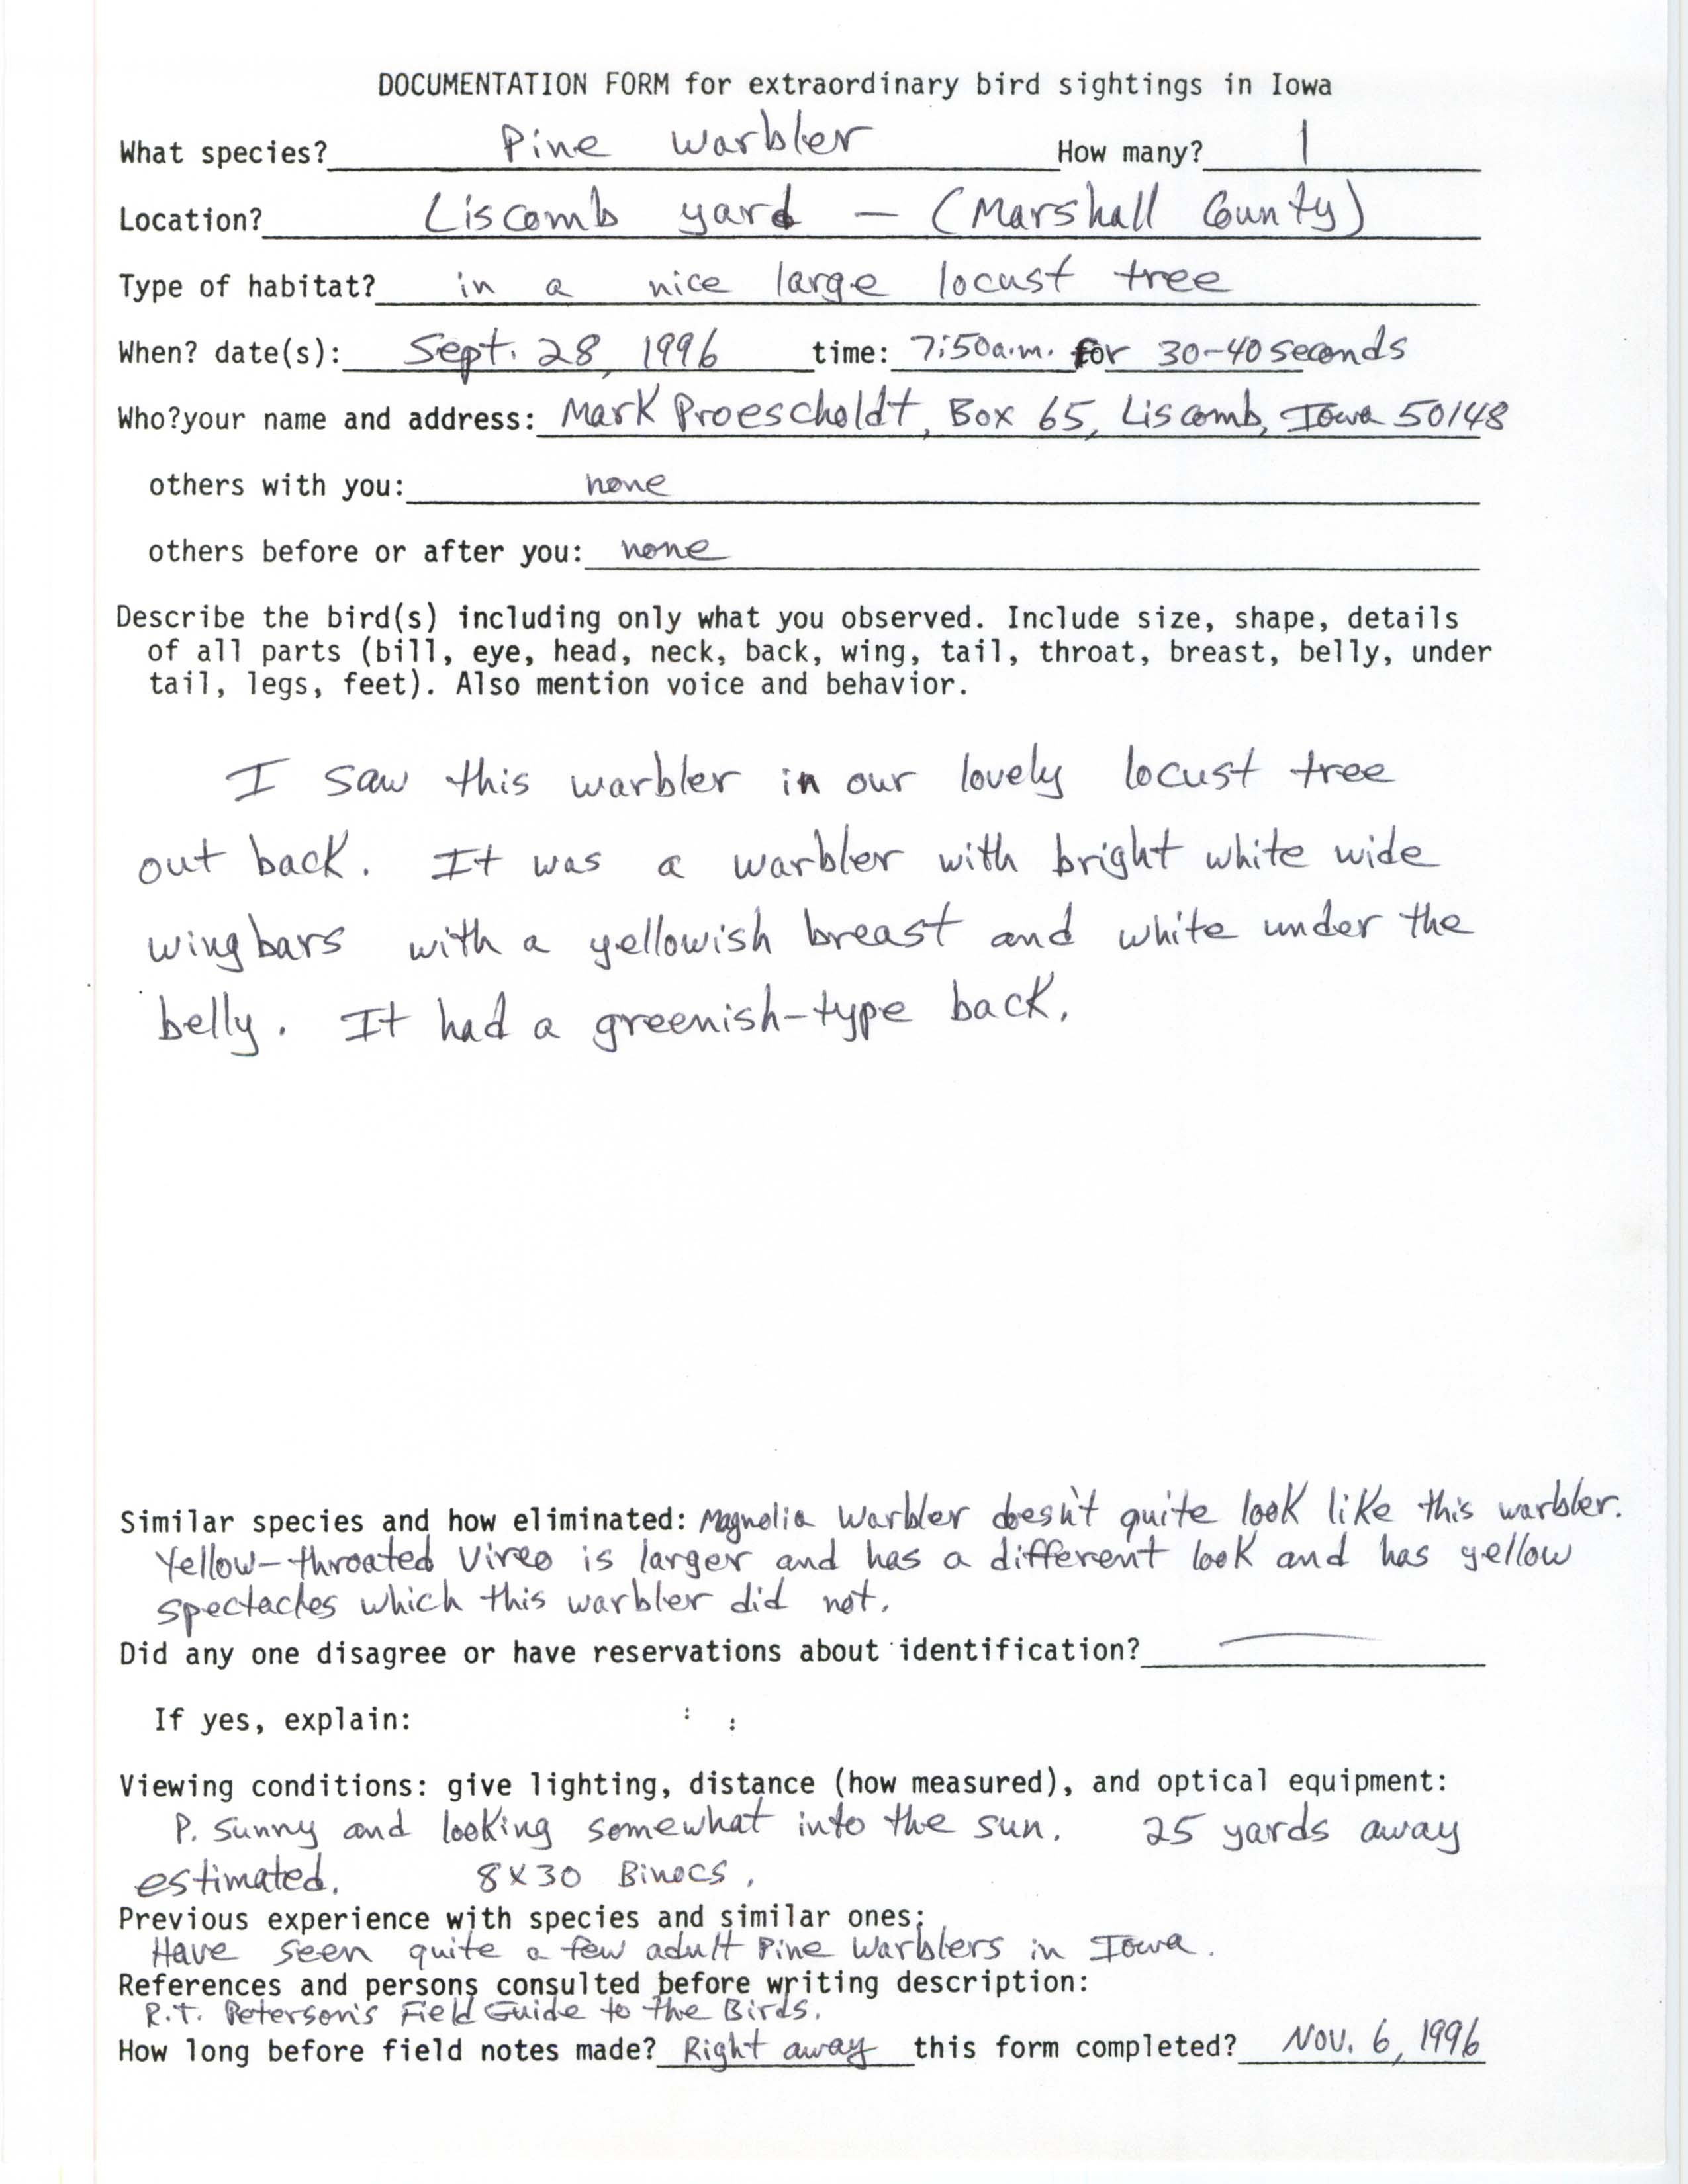 Rare bird documentation form for Pine Warbler at Liscomb, 1996